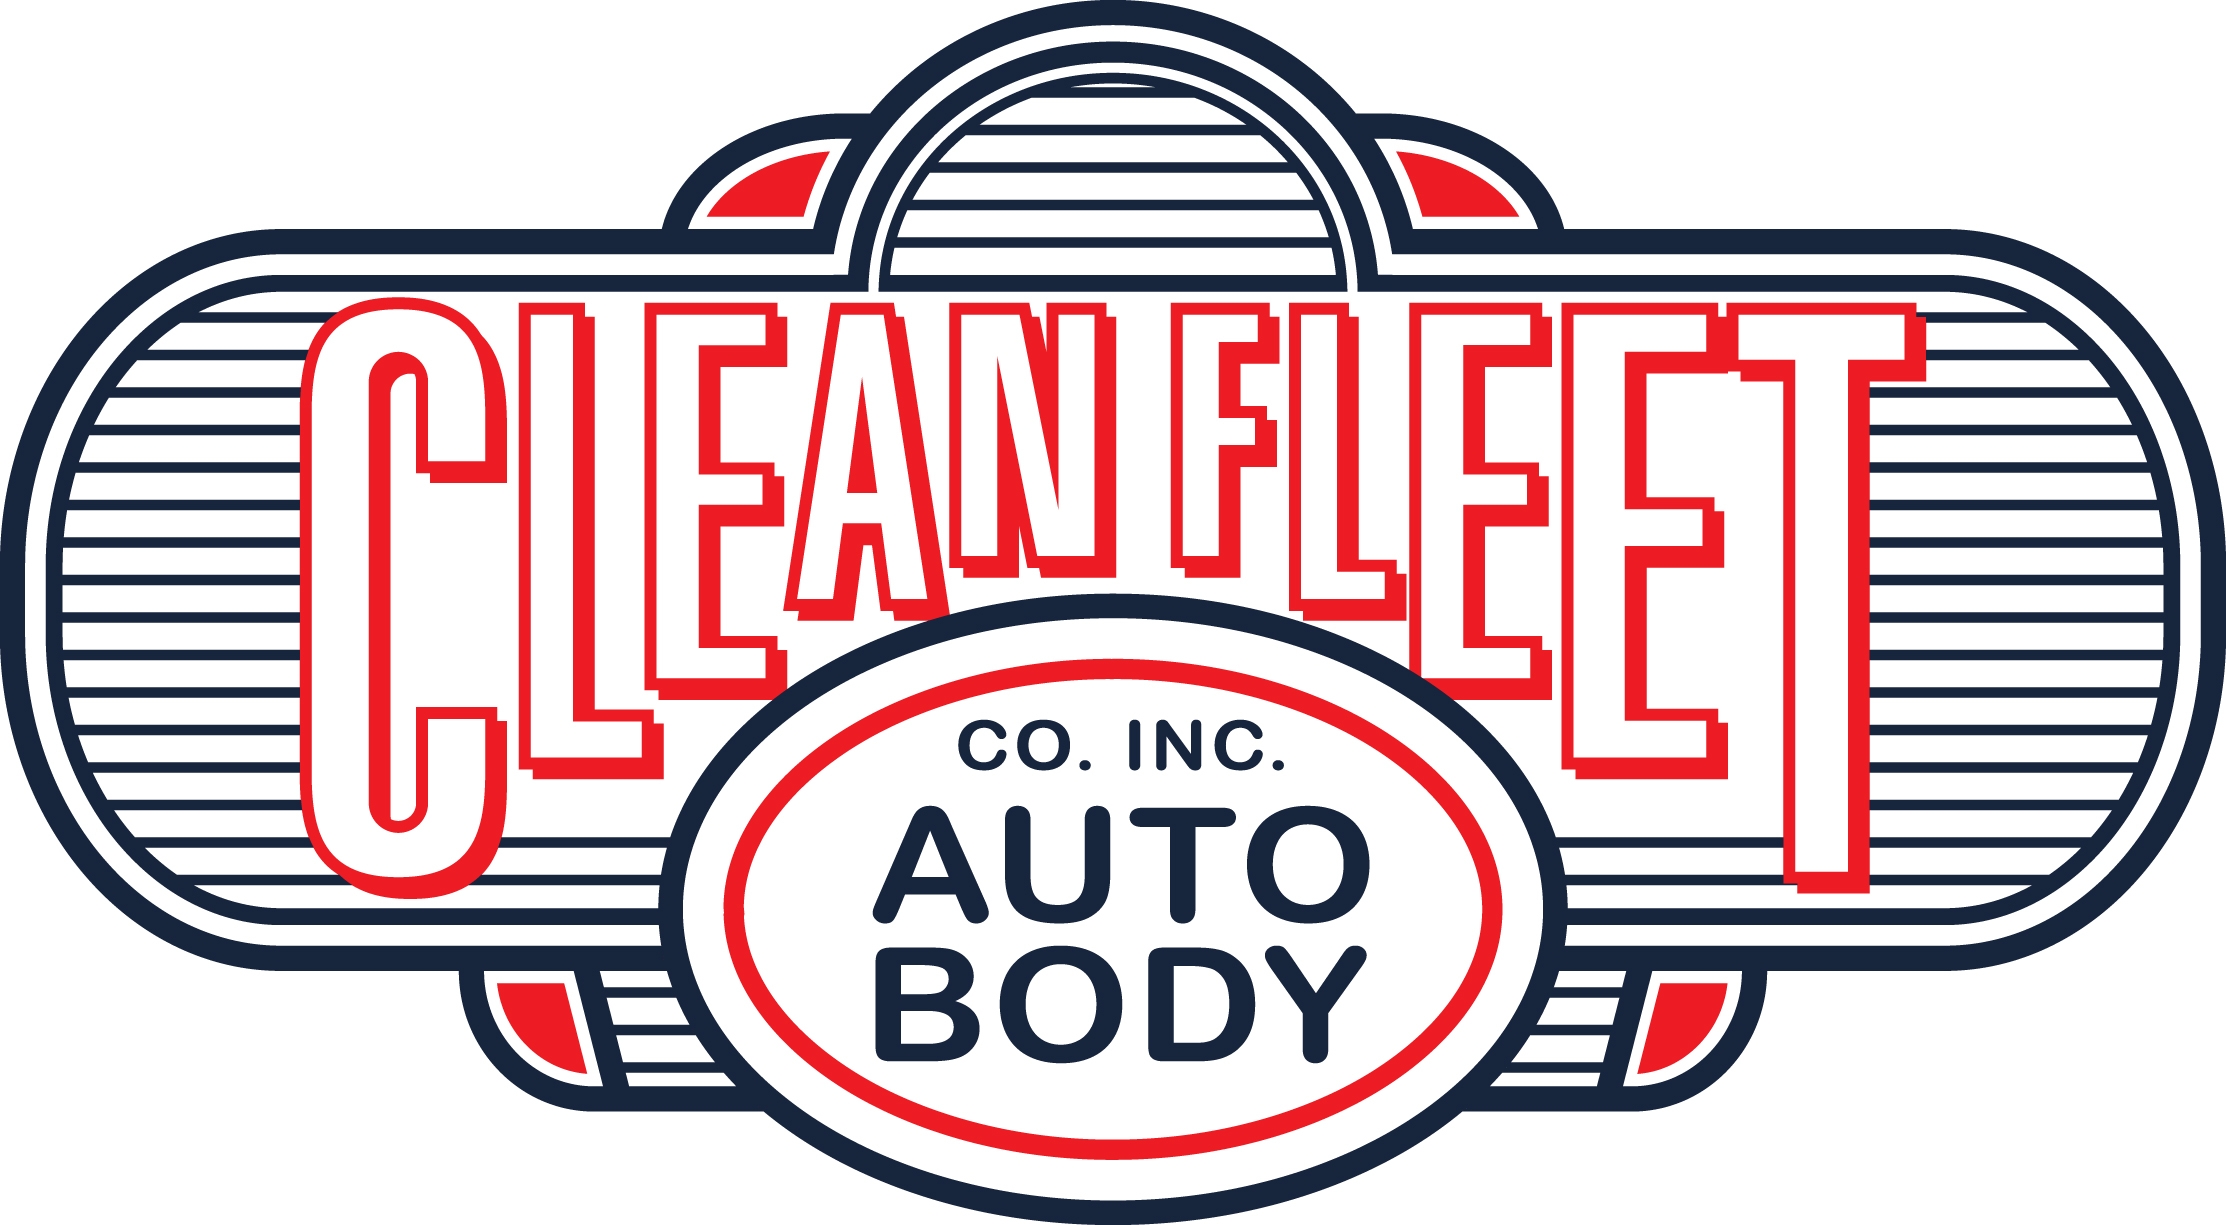 Clean Fleet Auto Body